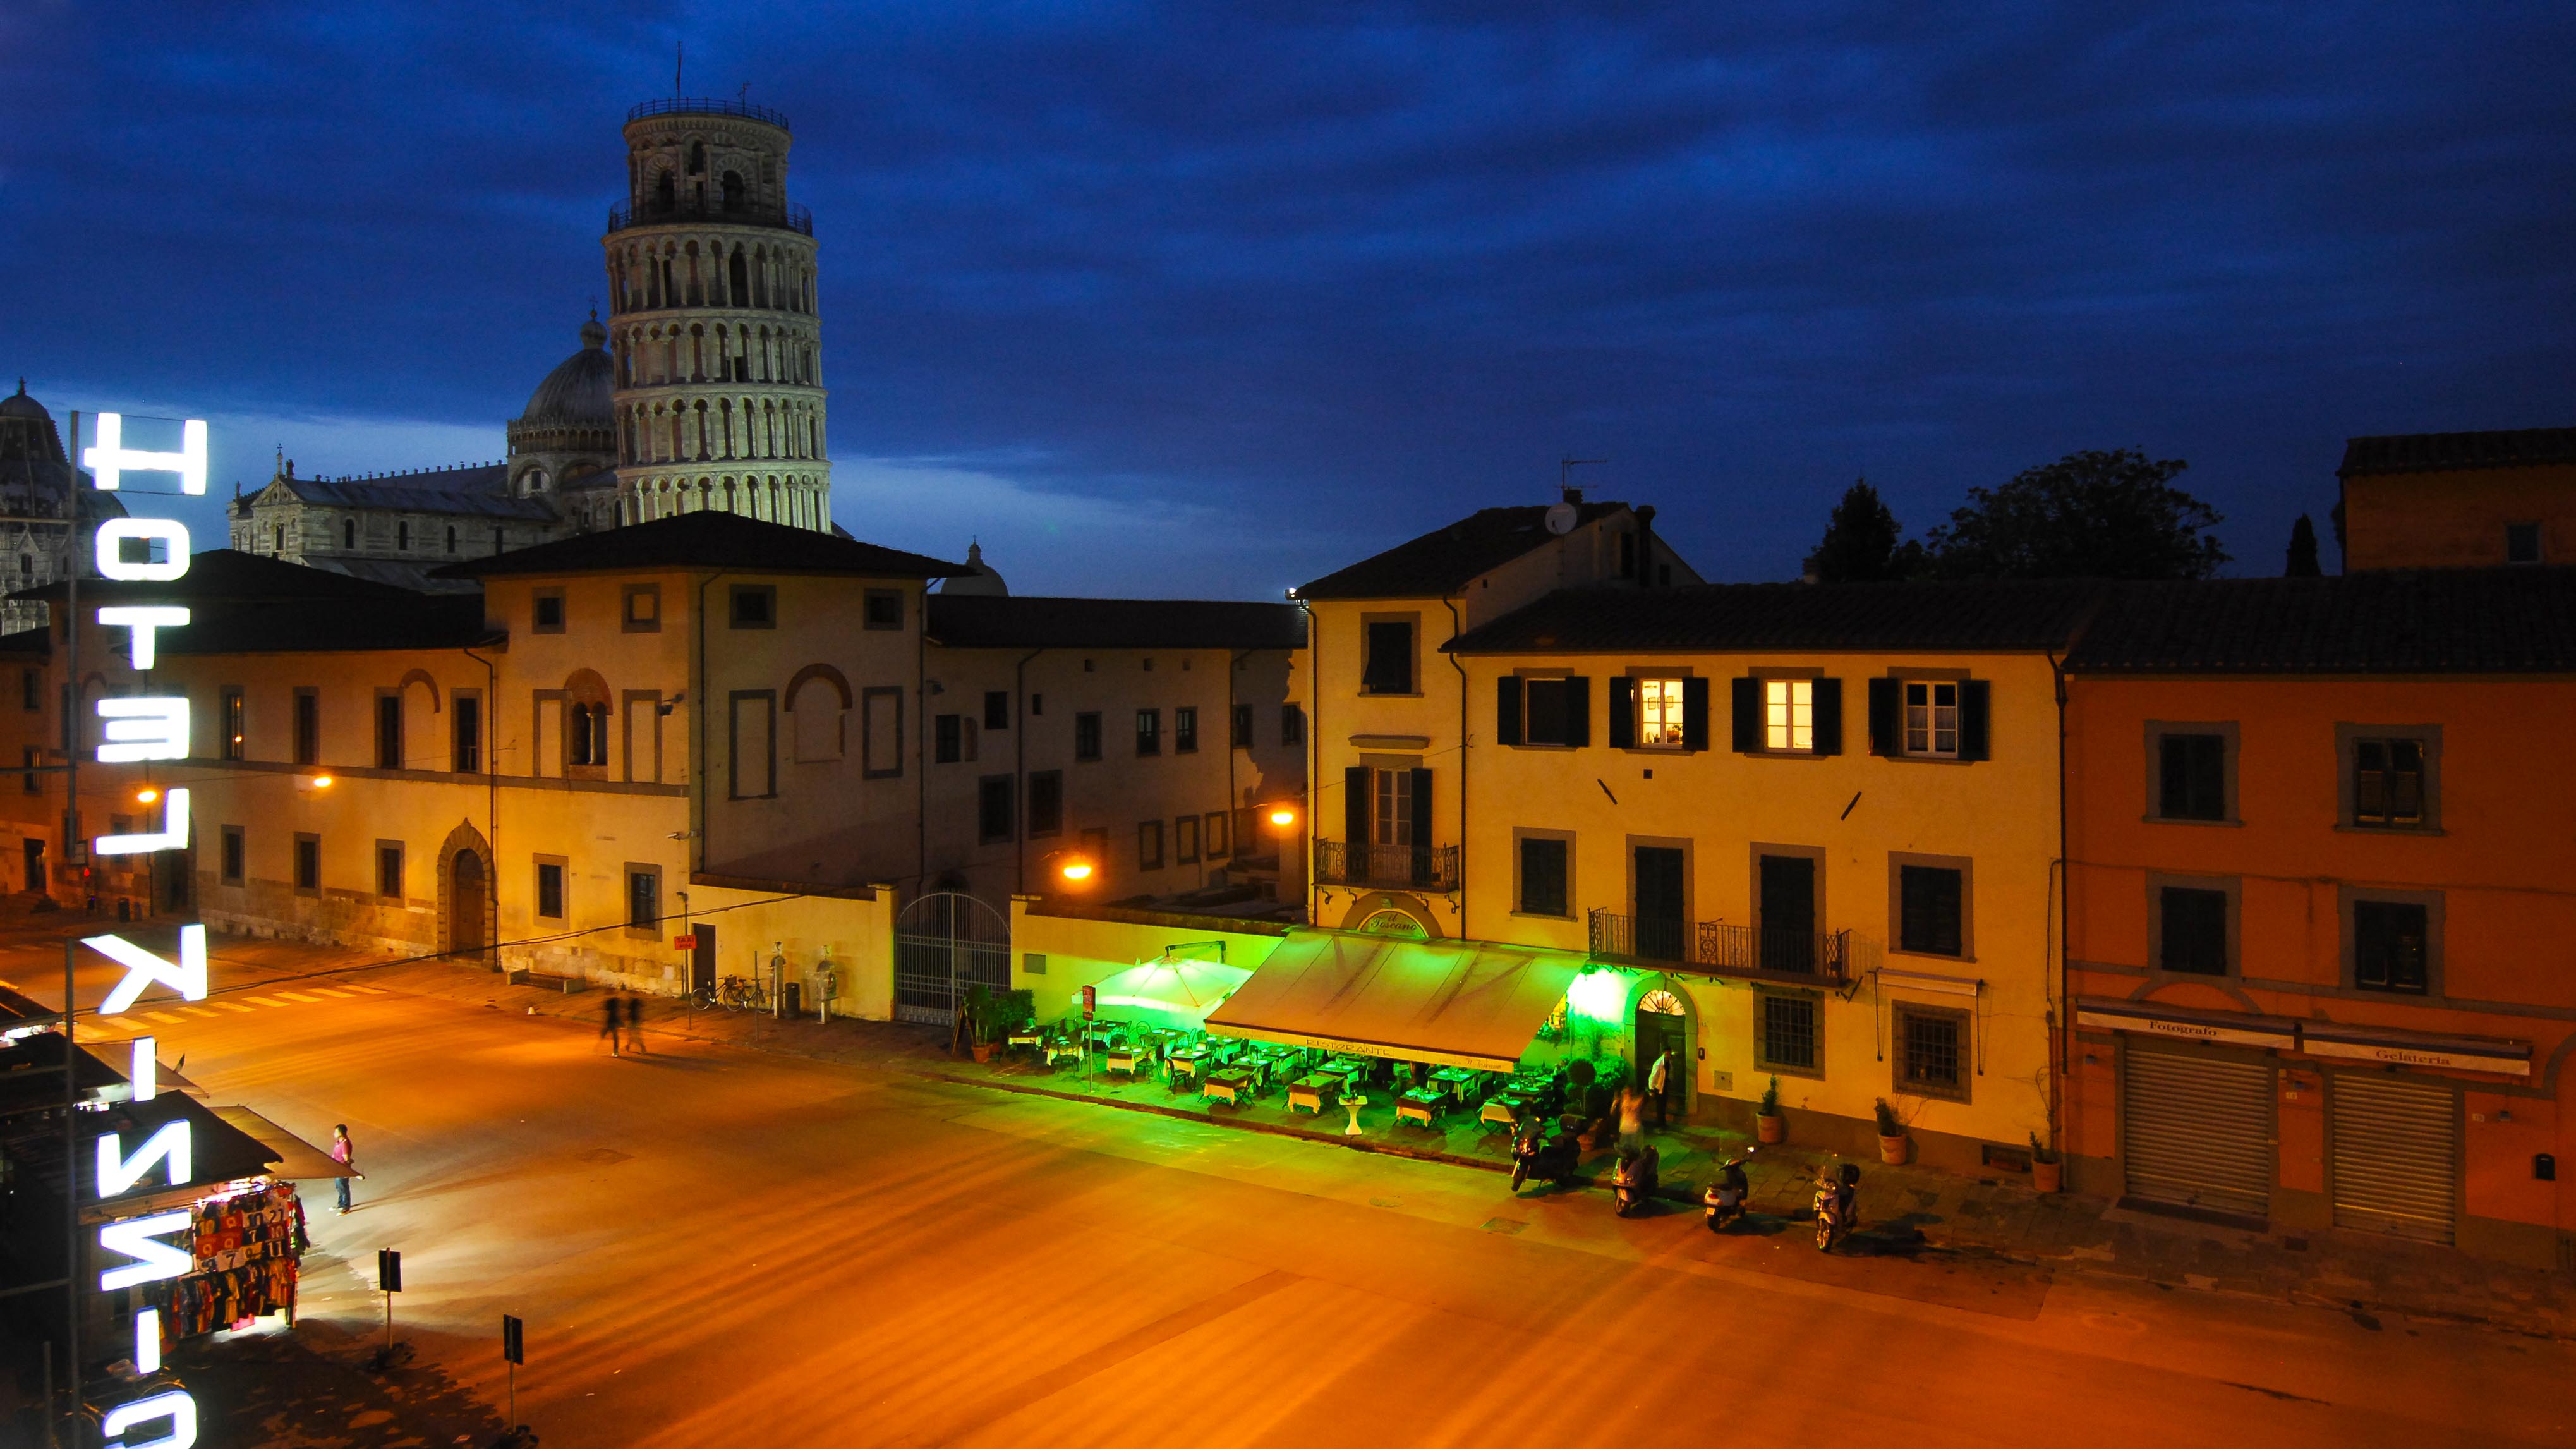 Overnight stay, Piazza Arcivescovado, Pisa, Italy